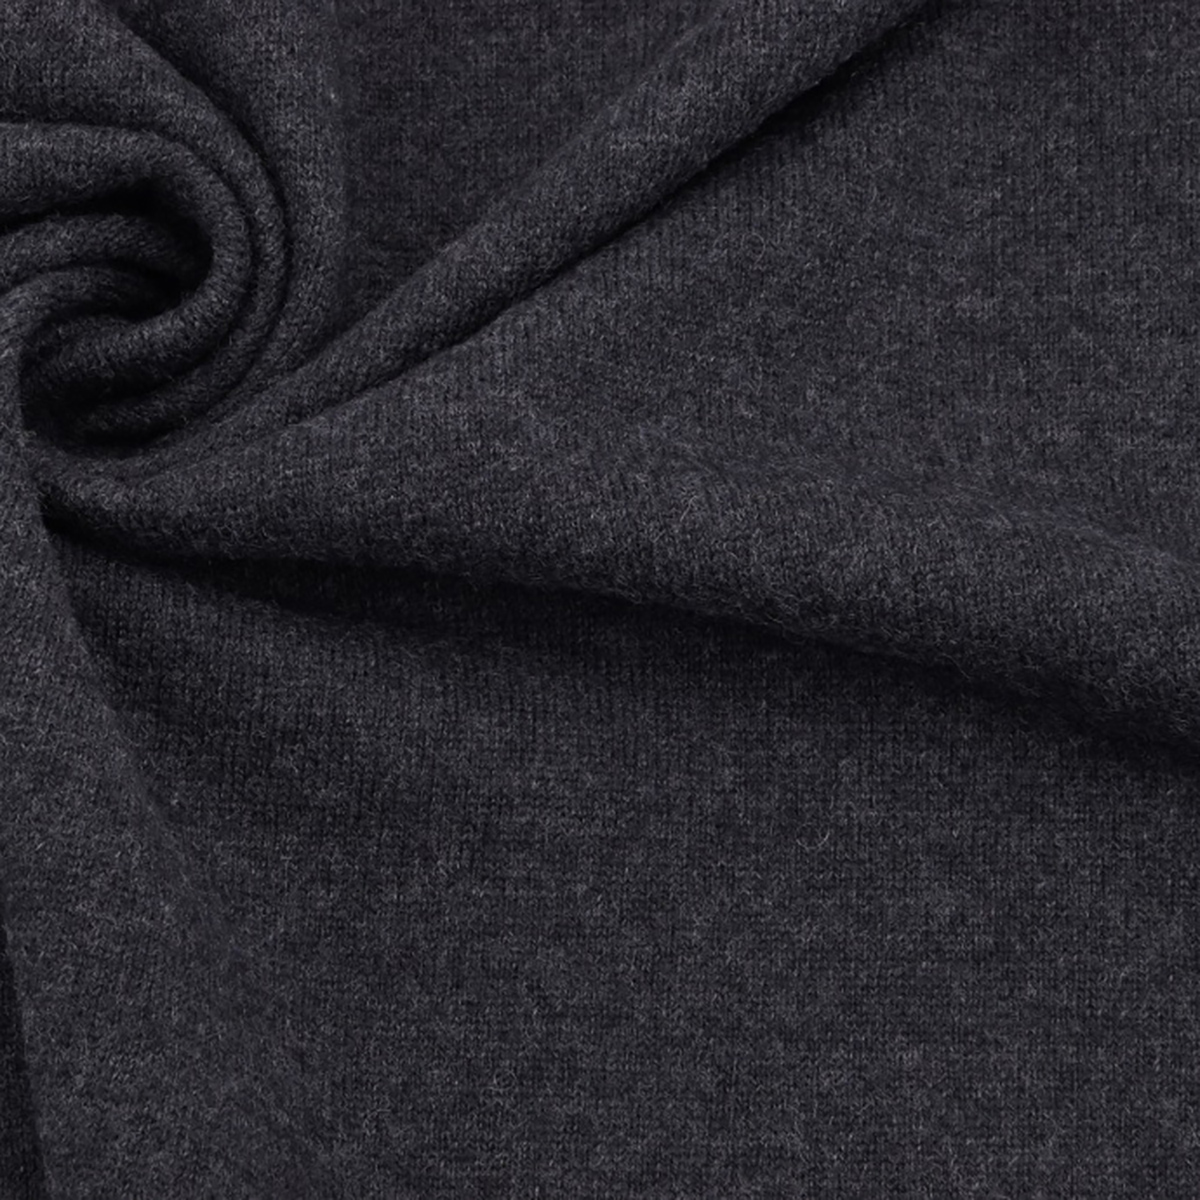 Woolen merino jersey shale grey